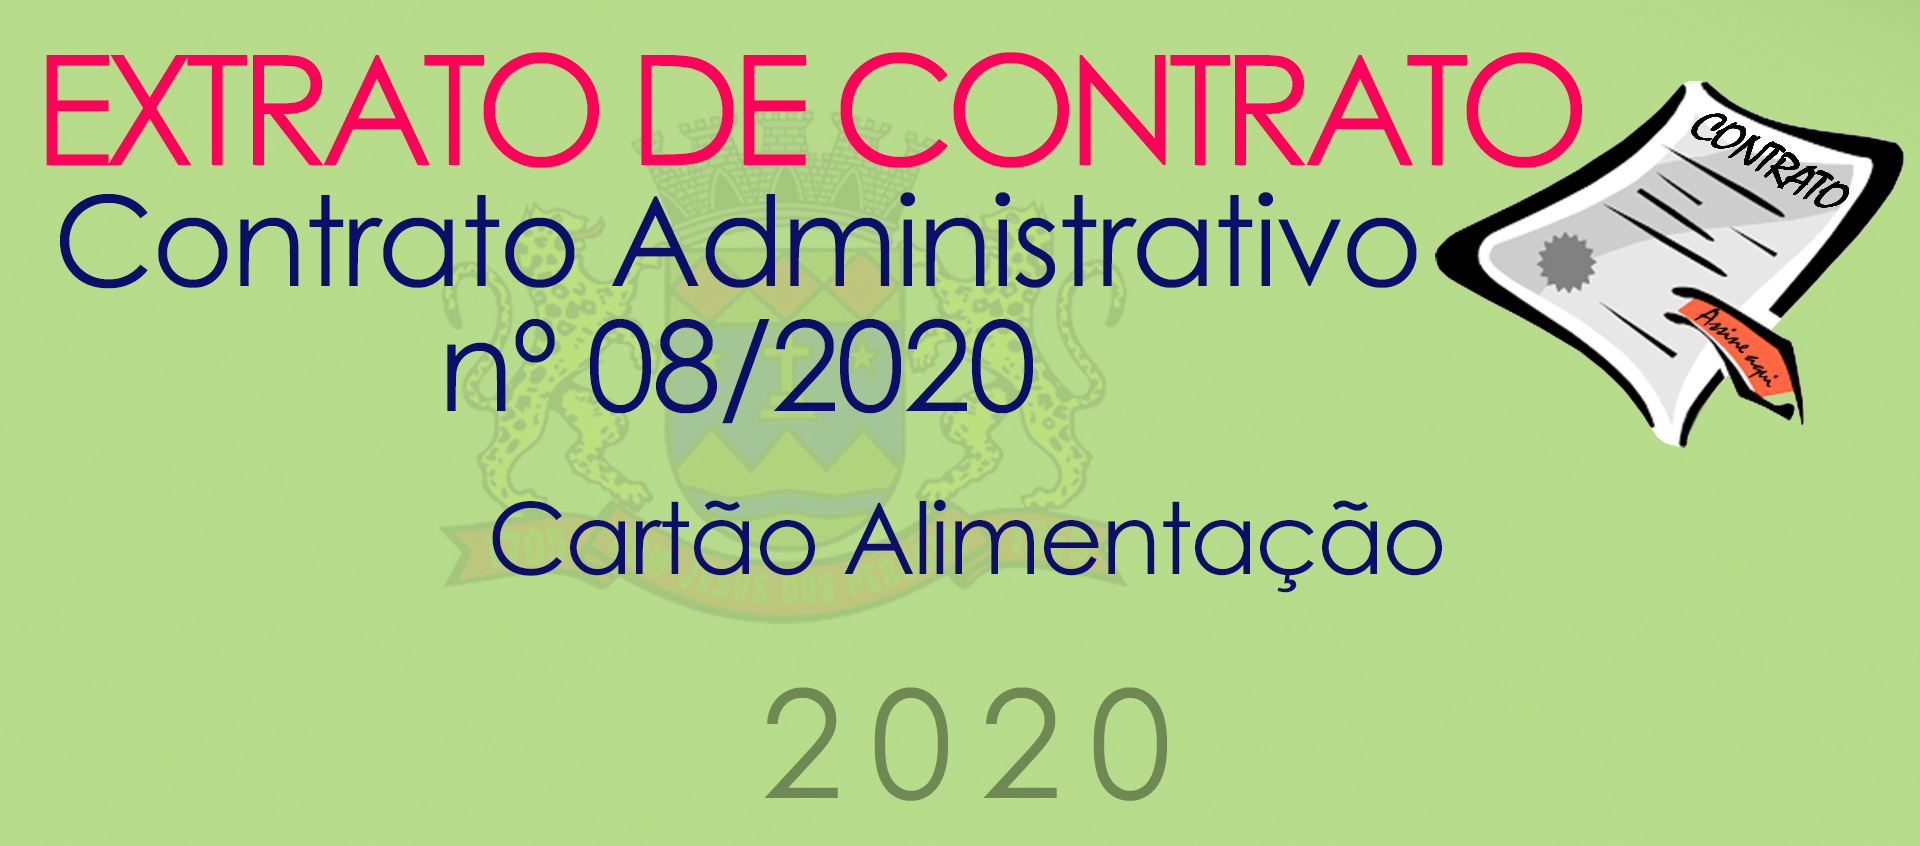 Extrato de Contrato Administrativo nº 08 de 2020